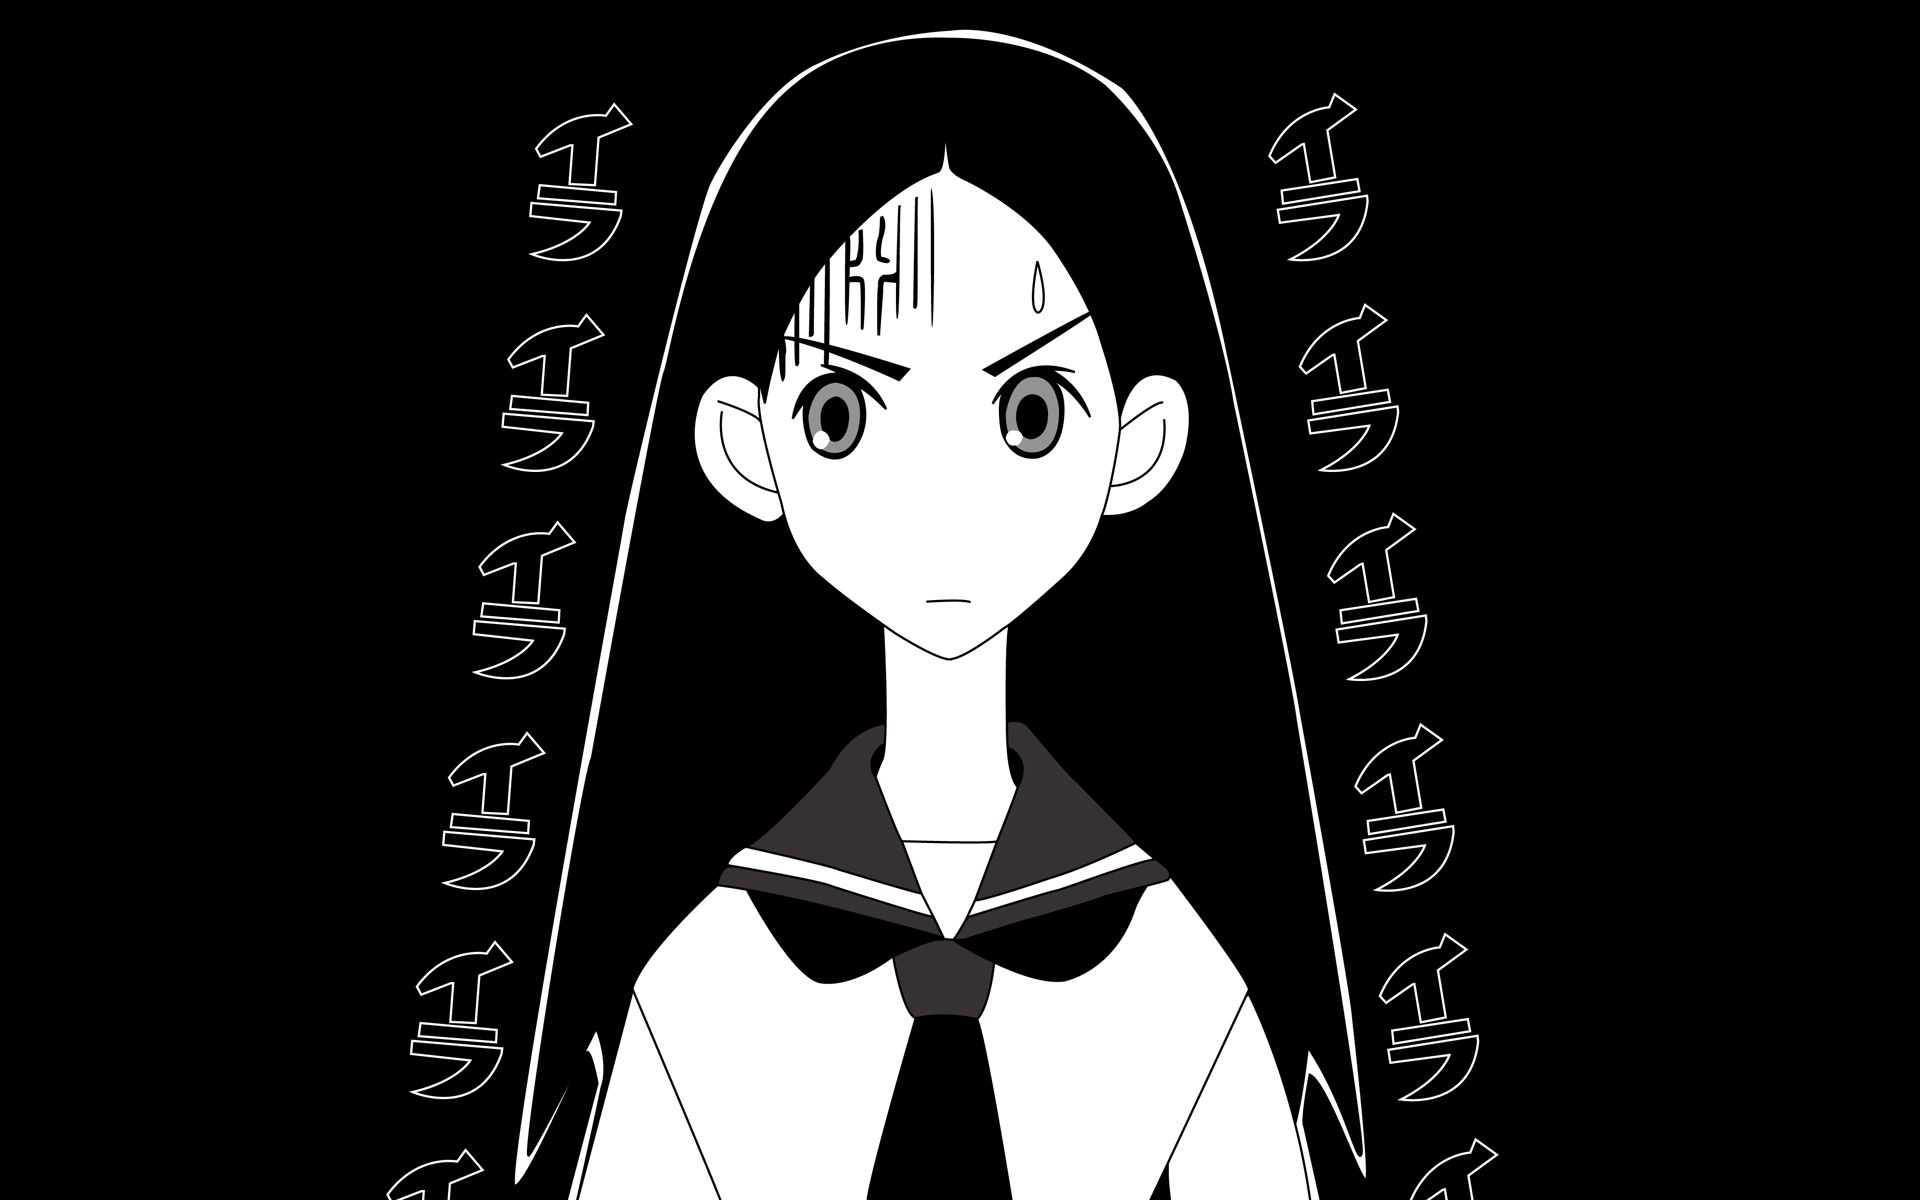 Descarga gratis la imagen Animado, Sayonara Zetsubō Sensei, Chiri Kitsu en el escritorio de tu PC